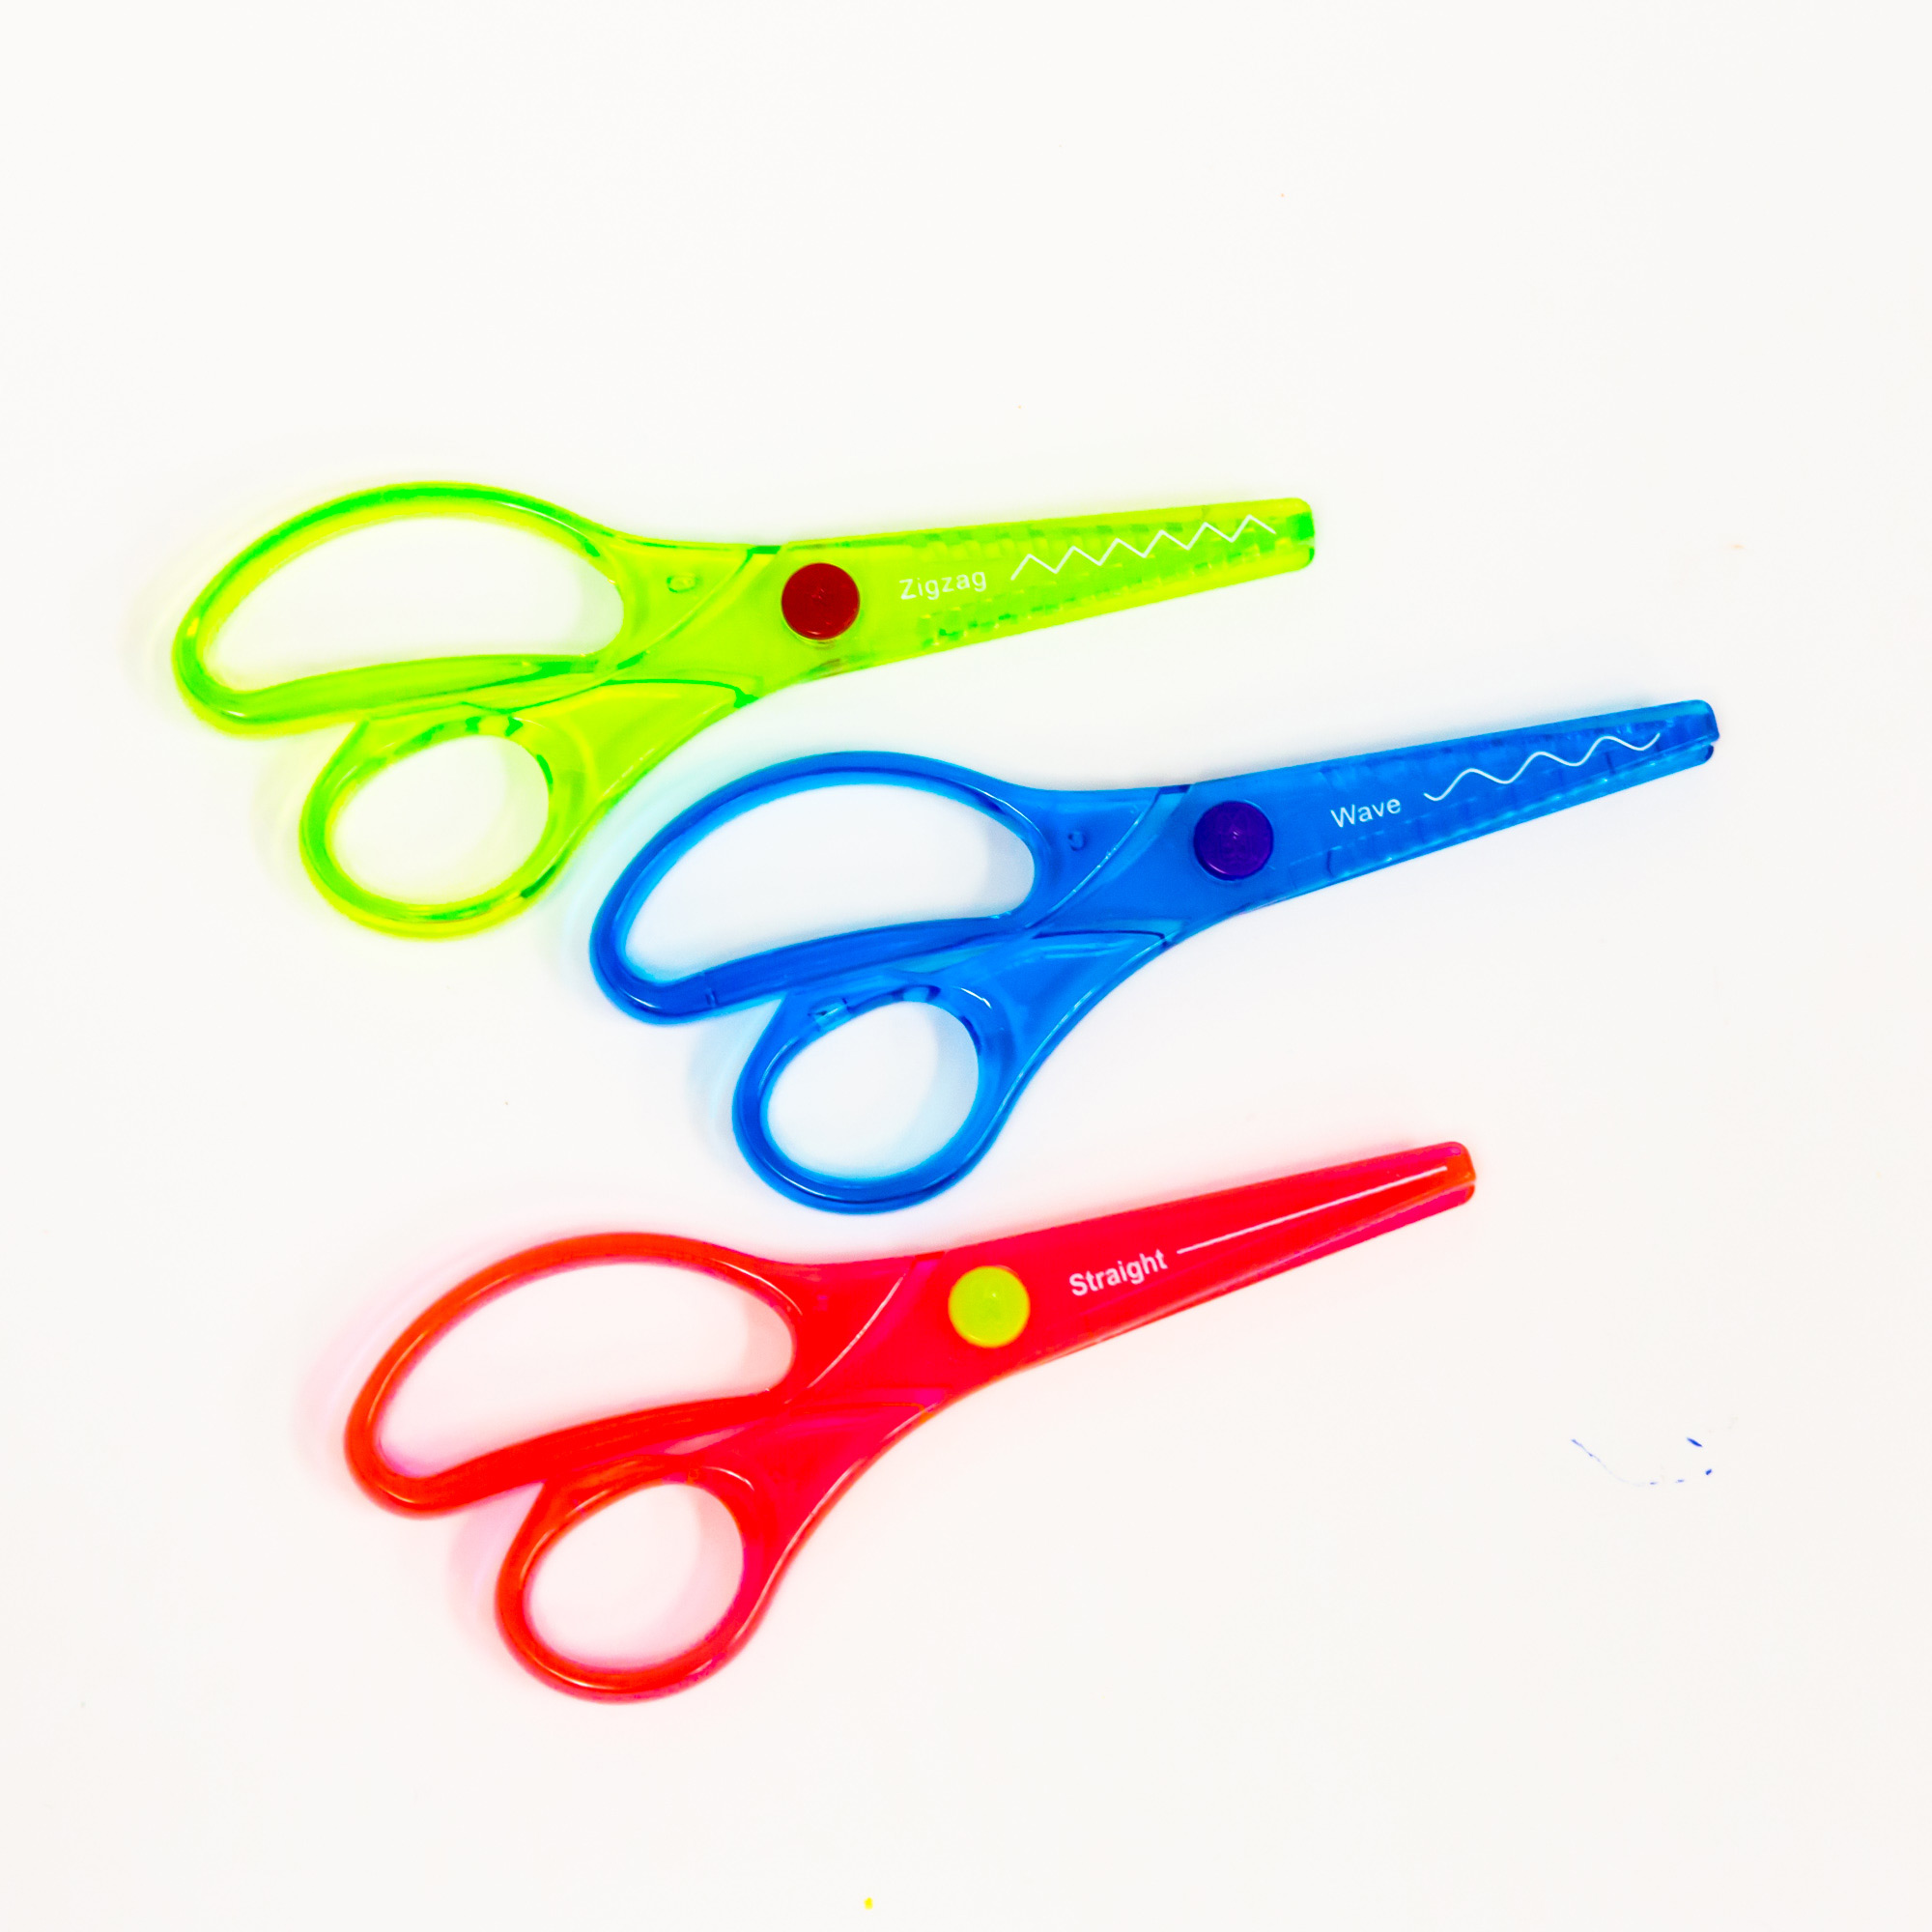 Child Safe Scissors